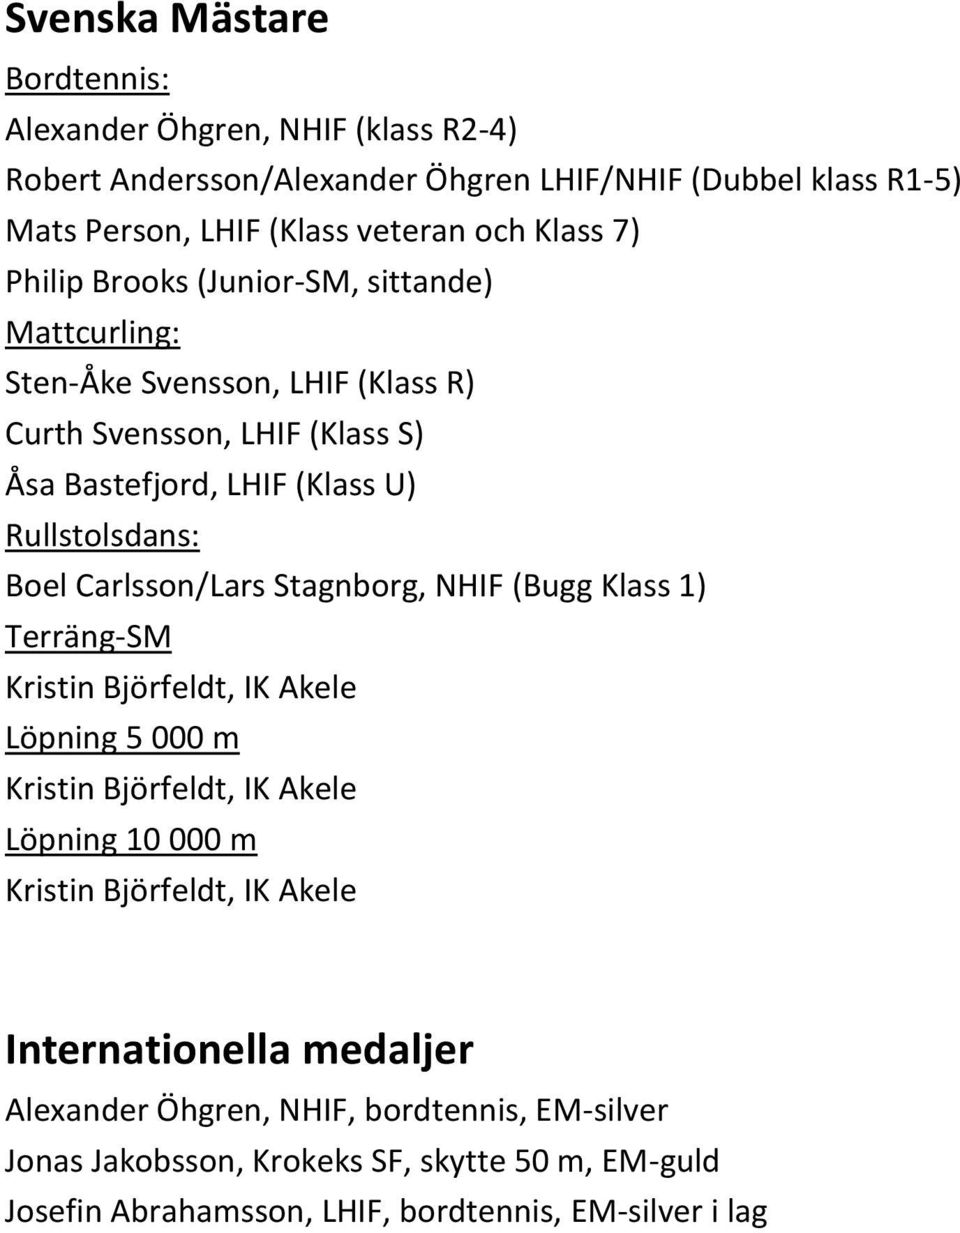 Carlsson/Lars Stagnborg, NHIF (Bugg Klass 1) Terräng-SM Kristin Björfeldt, IK Akele Löpning 5 000 m Kristin Björfeldt, IK Akele Löpning 10 000 m Kristin Björfeldt, IK